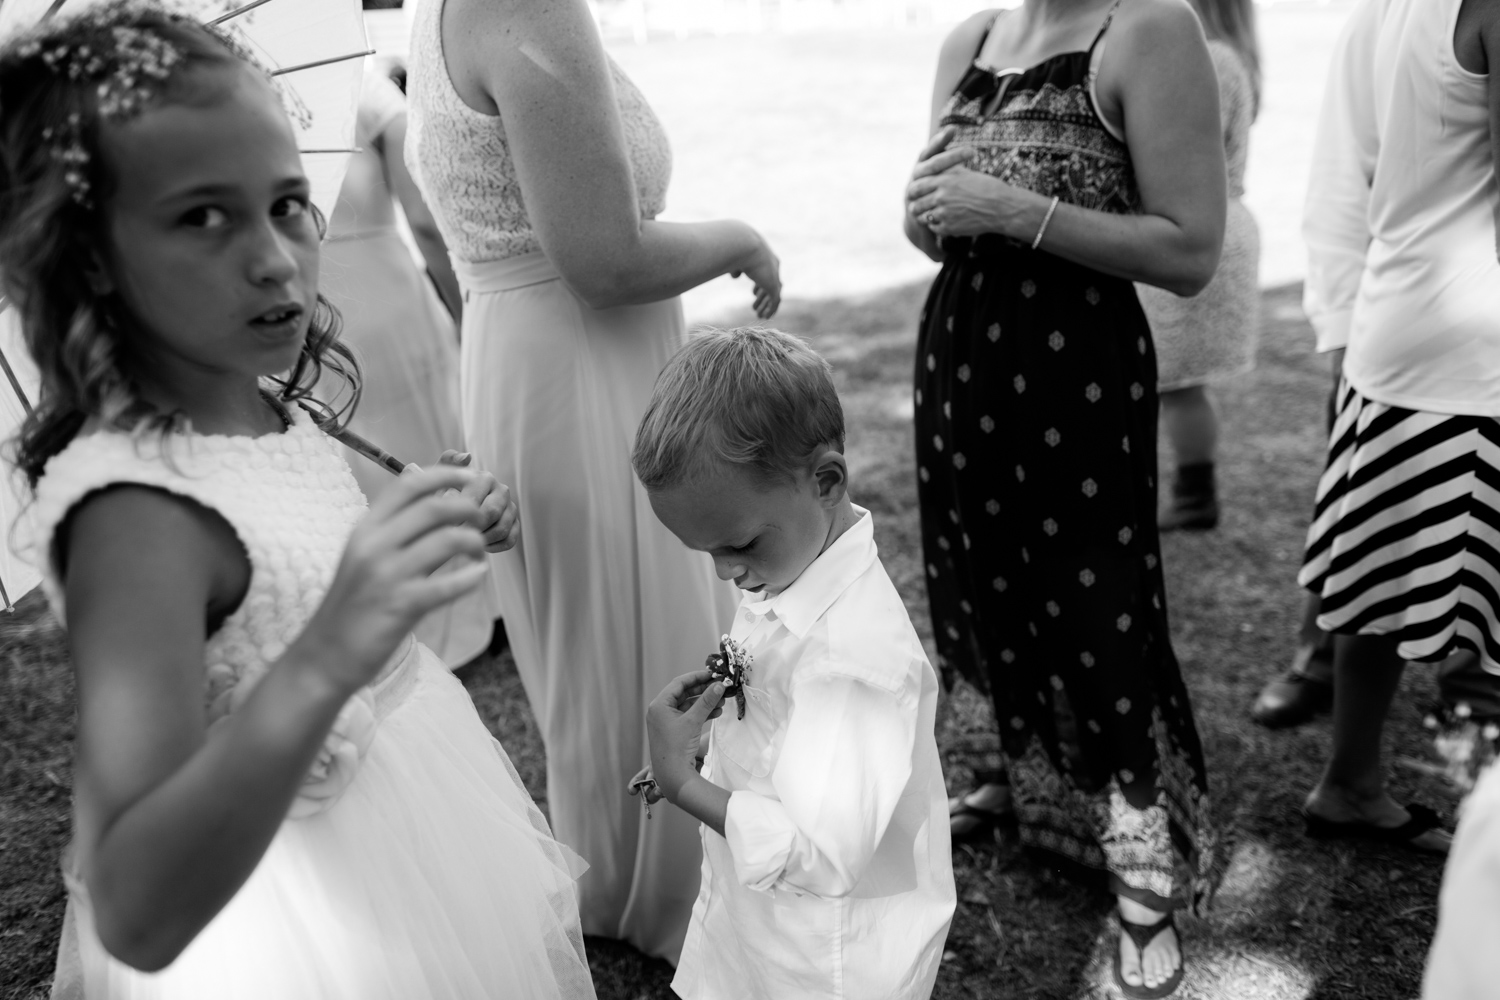 Napa Valley Vacaville Wedding Photographer - Hannah & Stephen - The Gathering Season x weareleoandkat 019.jpg